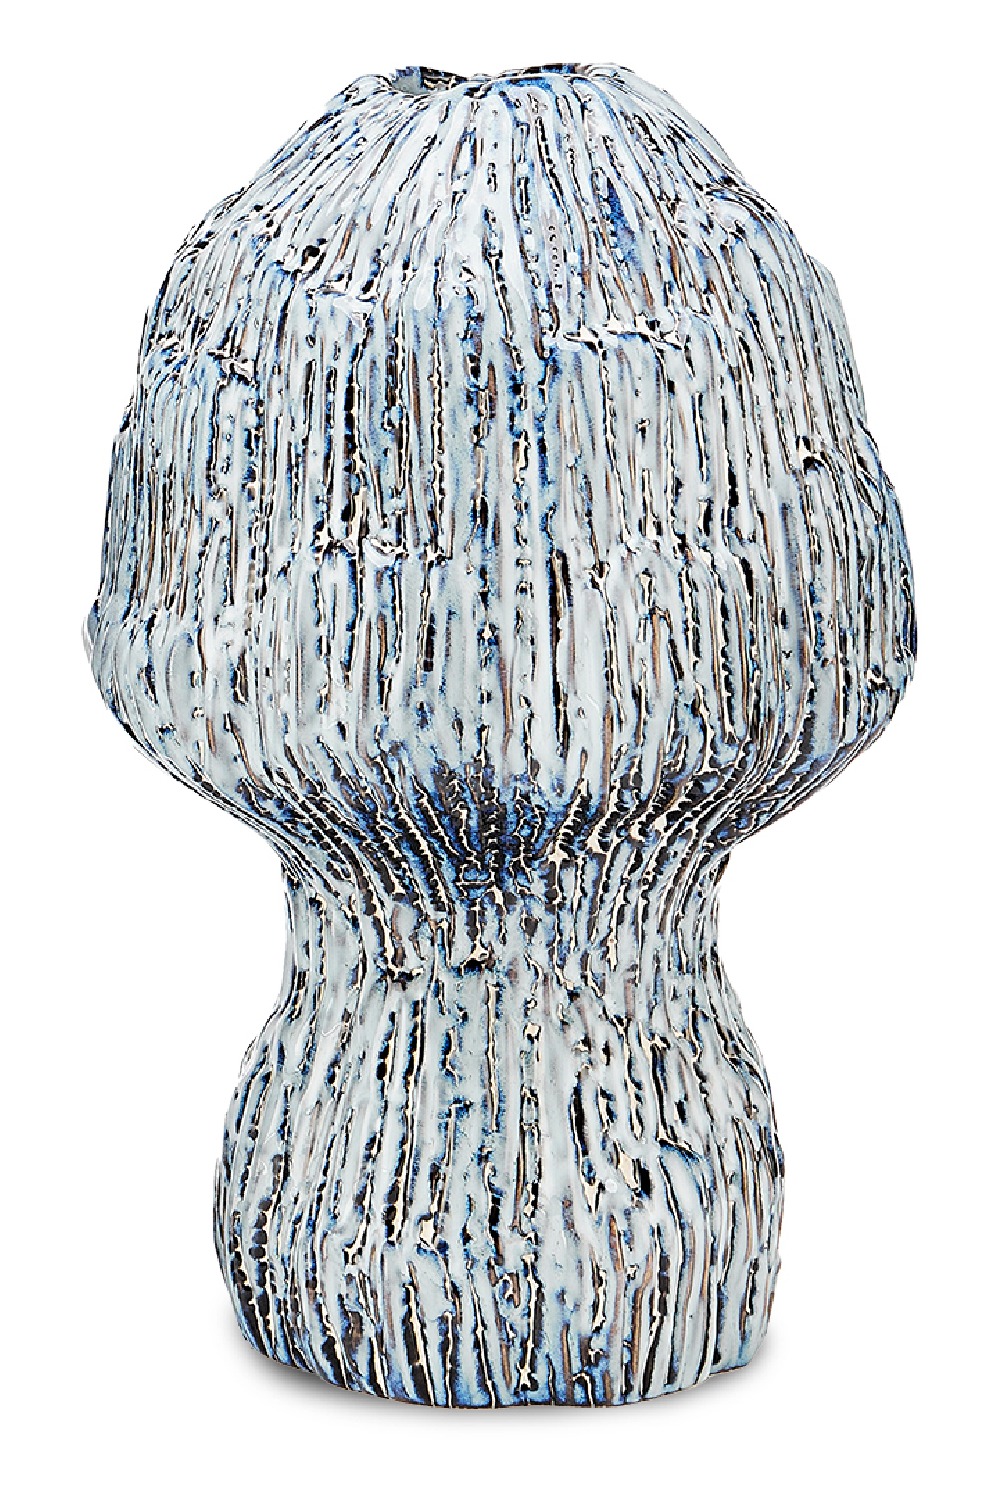 Multicolored Ceramic Mushroom Vase | Liang & Eimil Lennon | Oroa.com